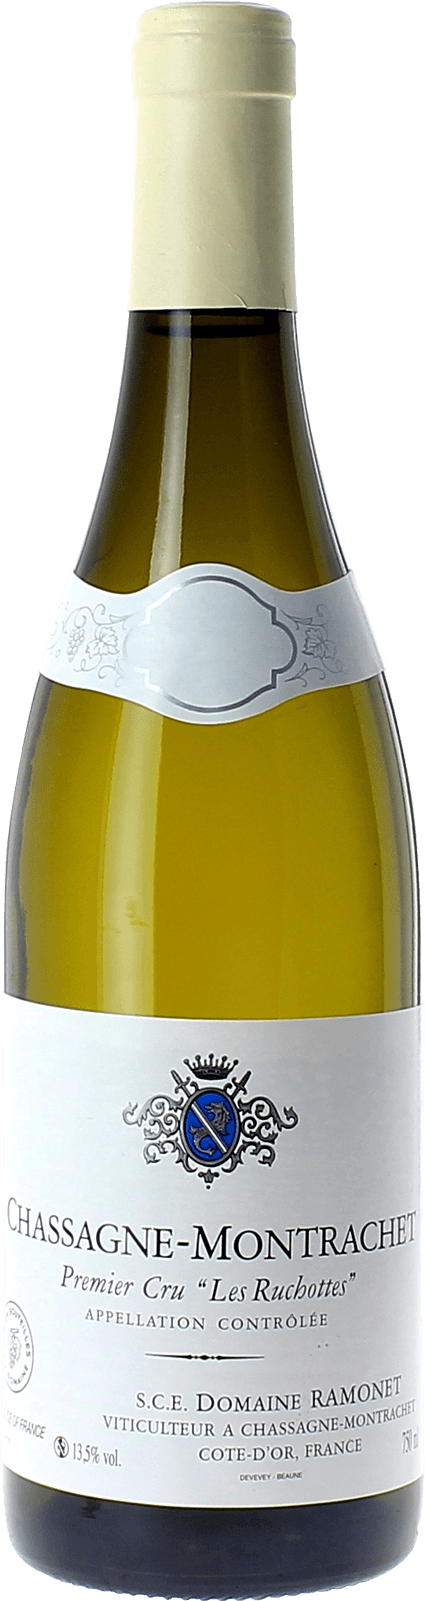 Chassagne montrachet ruchottes 2015 Domaine RAMONET, Bourgogne blanc